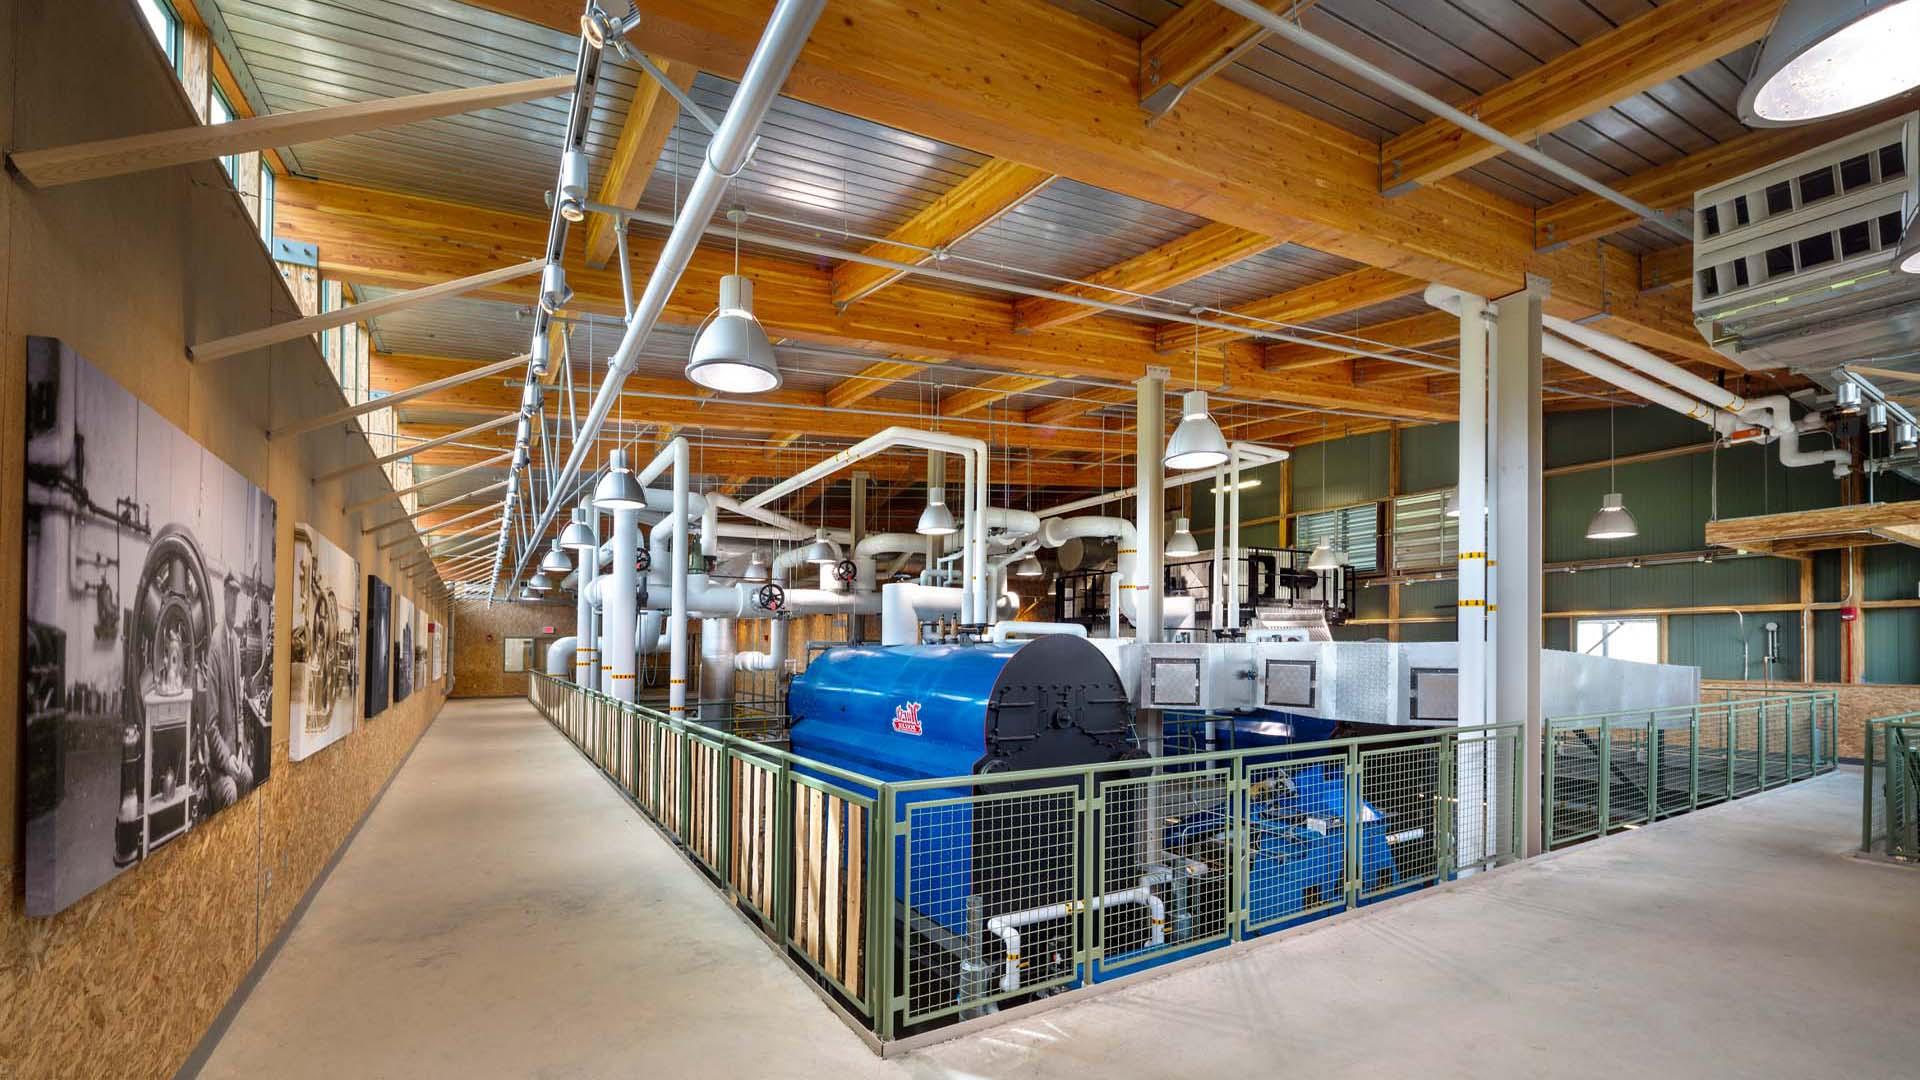 Biomass Heating Plant at Hotchkiss School